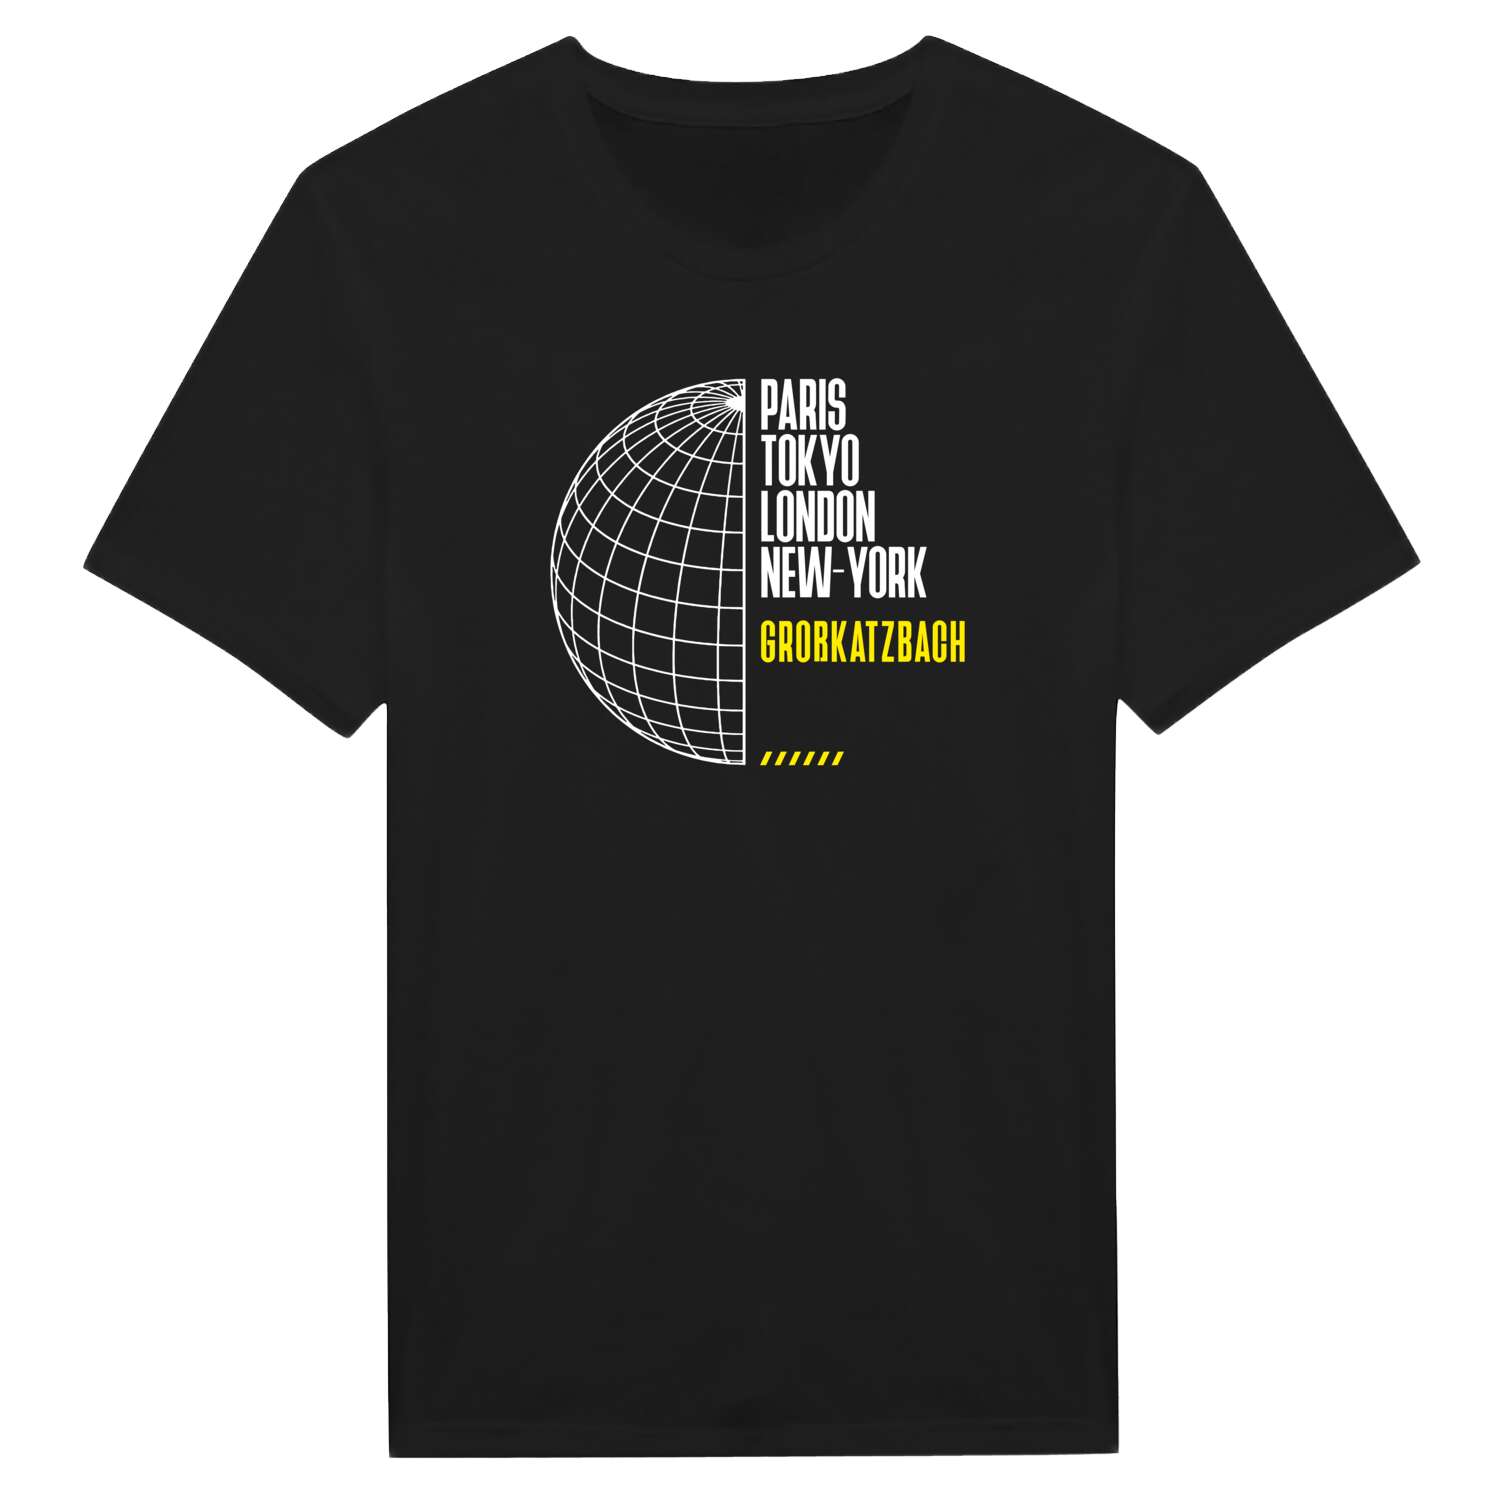 Großkatzbach T-Shirt »Paris Tokyo London«